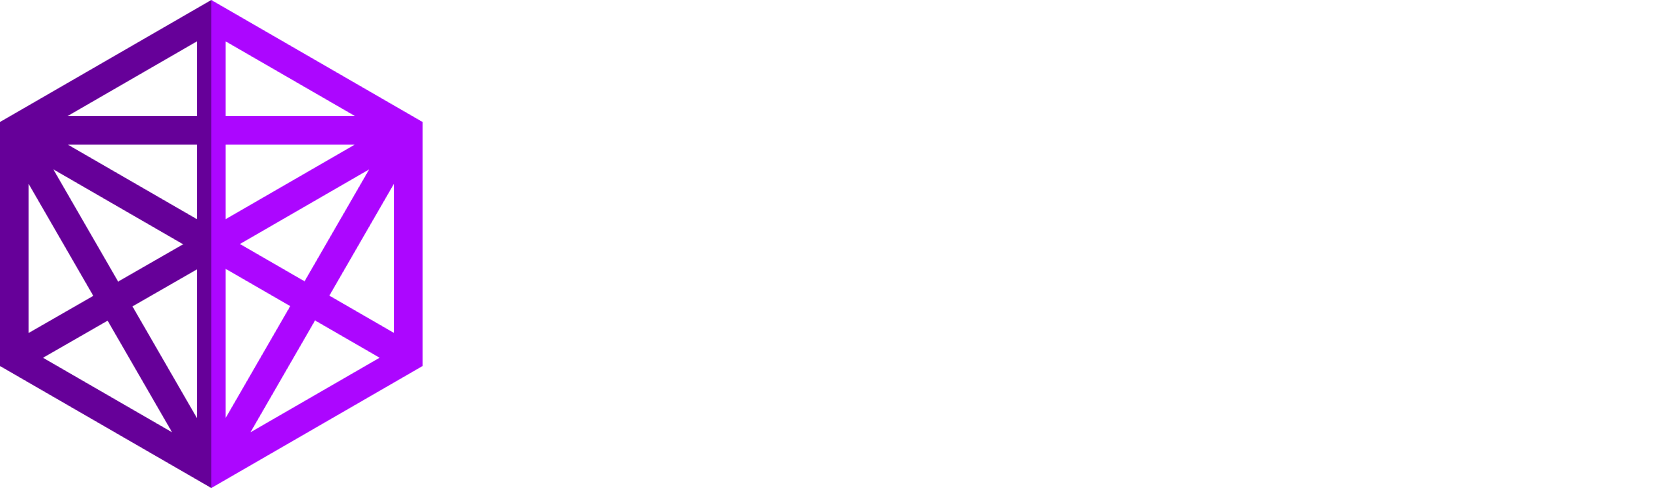 CloudOptimo Logo